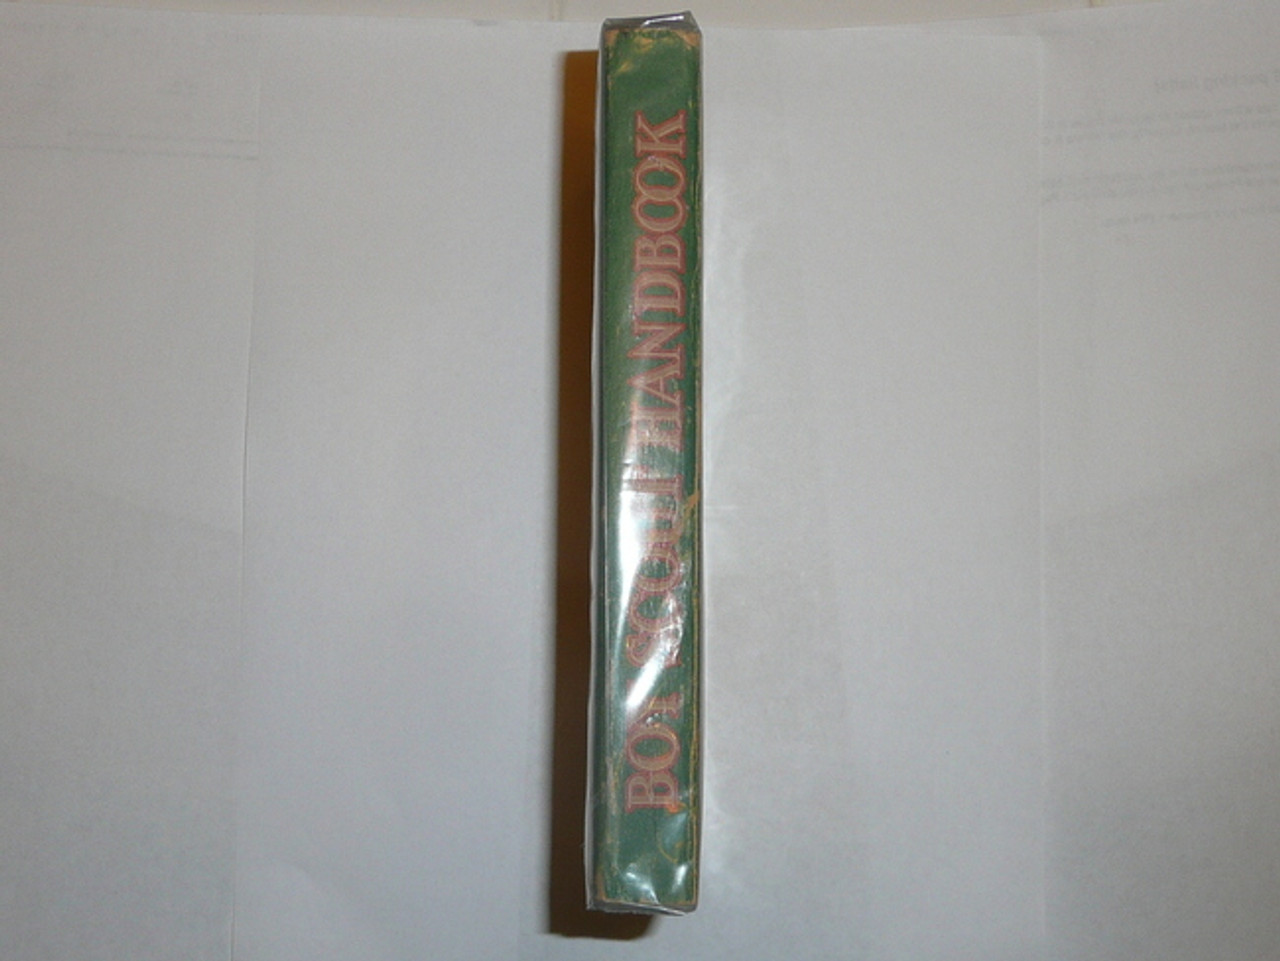 1941 Boy Scout Handbook, Fourth Edition, Thirty-fourth Printing, Norman Rockwell Cover, near MINT, minimal edge wear